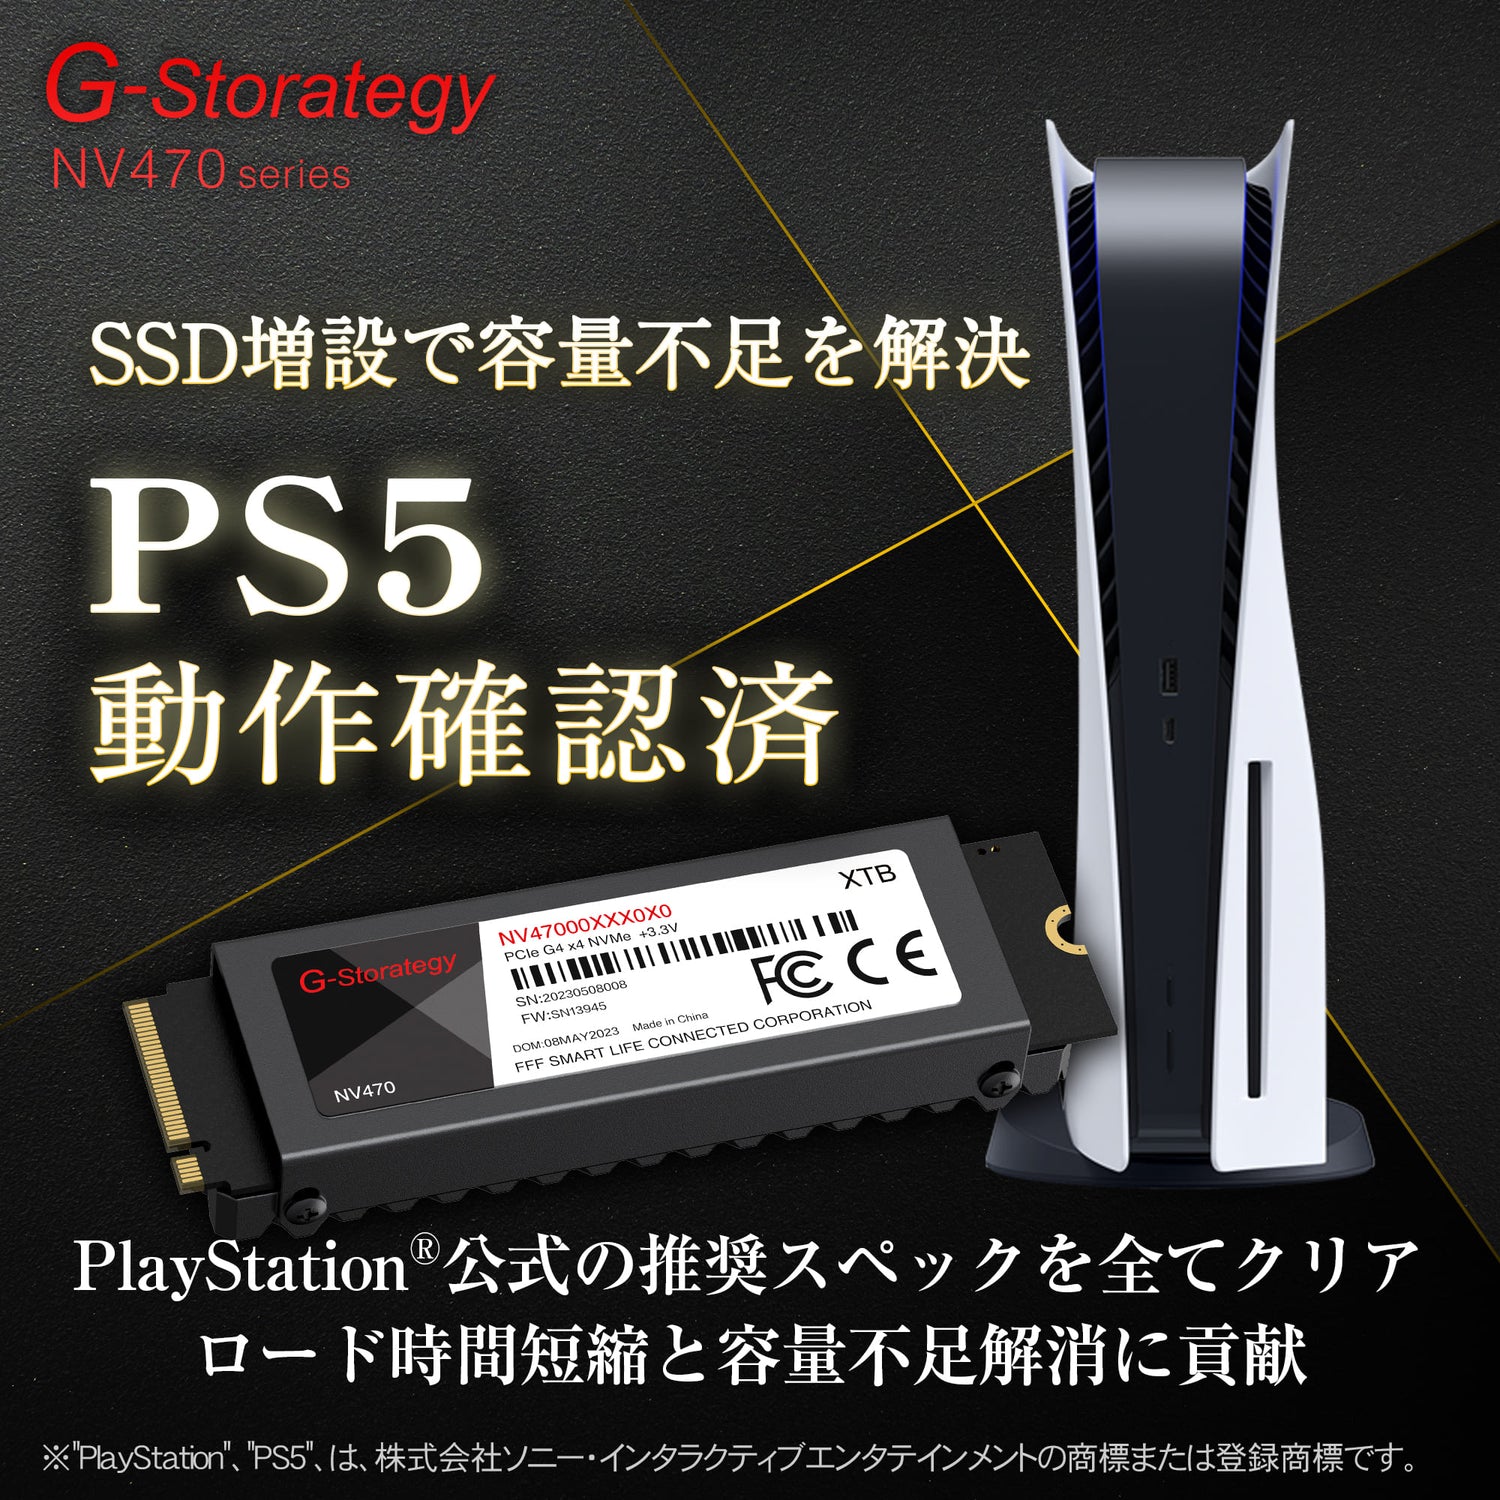 G-Storategy SSD ヒートシンク付き 1TB Gen4×4 最大読込:7450MB/s 最大書込:6600MB/s 5年保証 NV47001TBY3G1